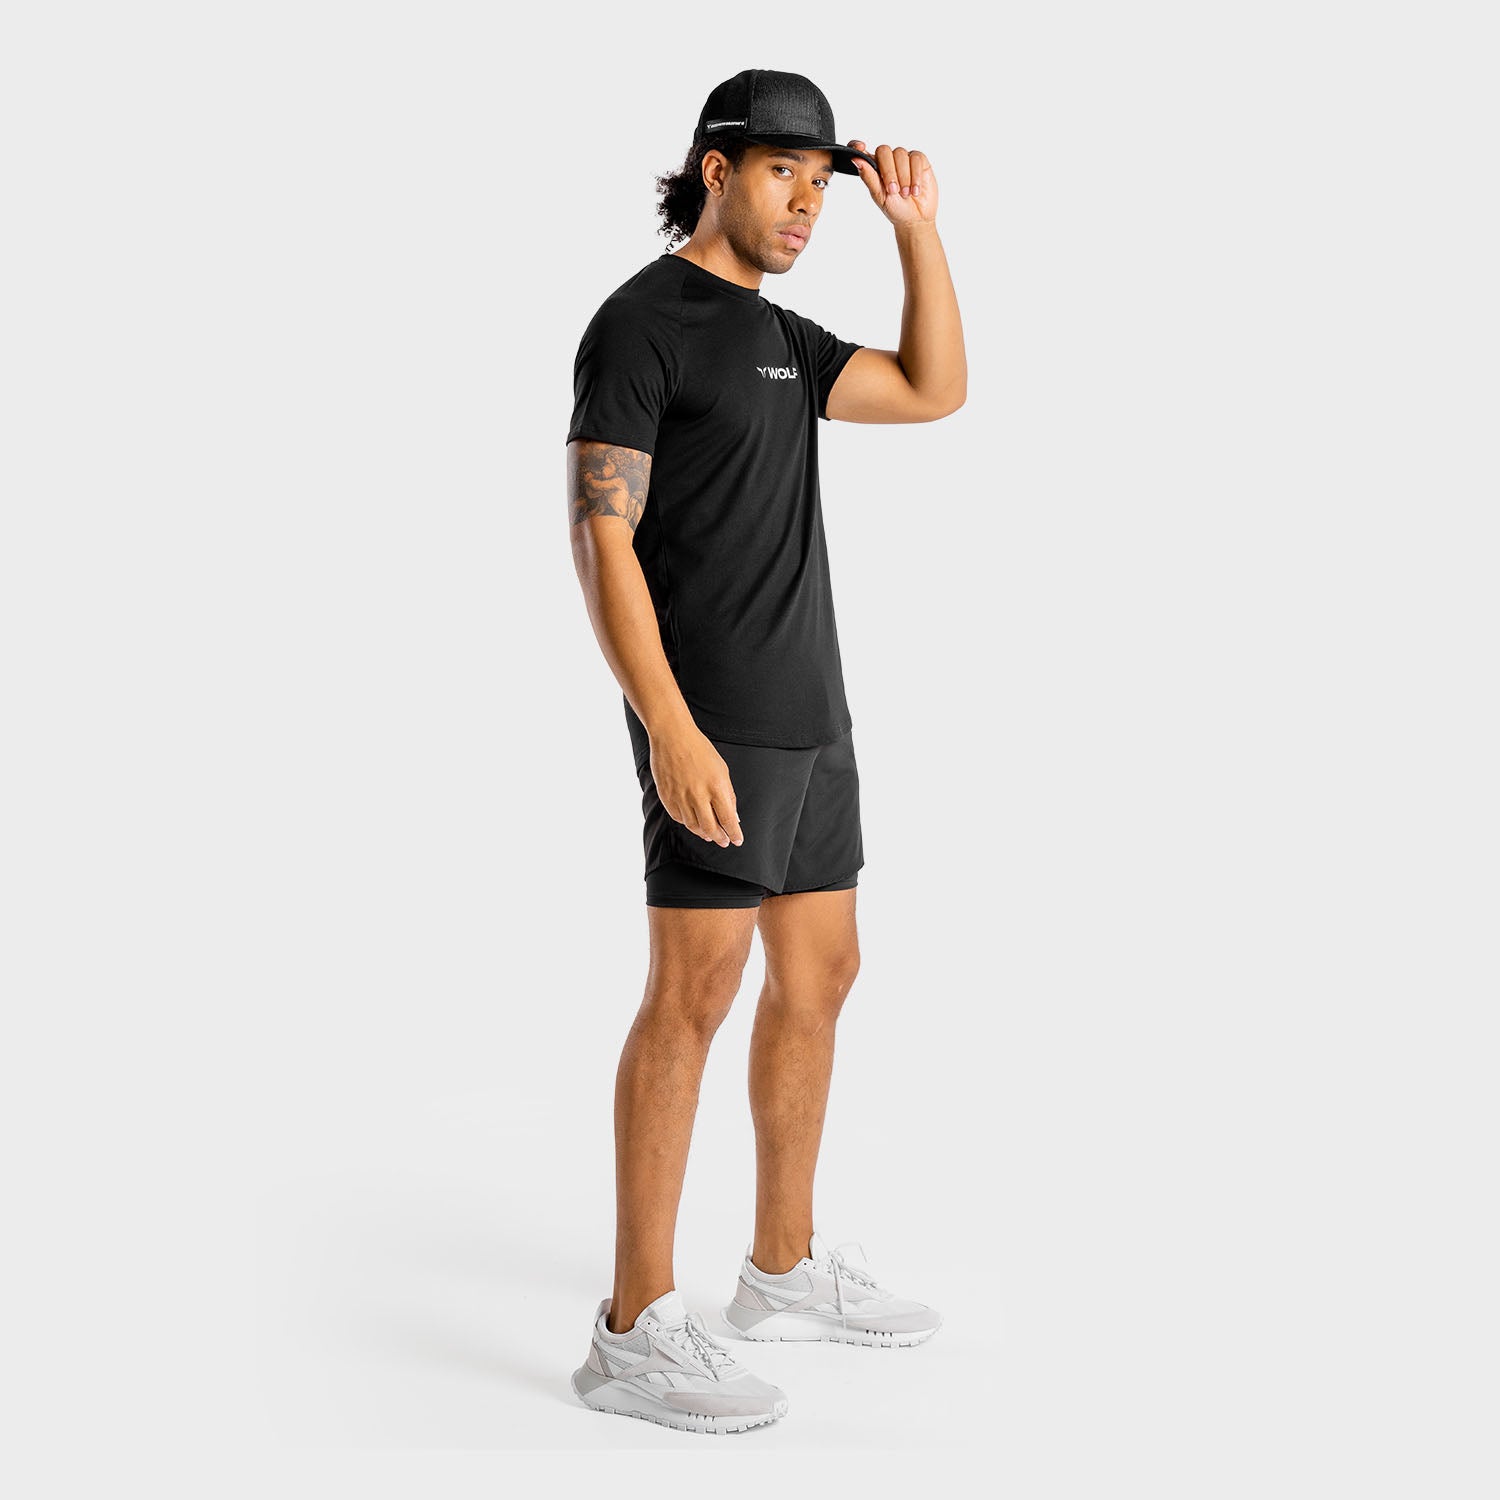 squatwolf-workout-short-for-men-primal-shorts-2-in-1-black-gym-wear